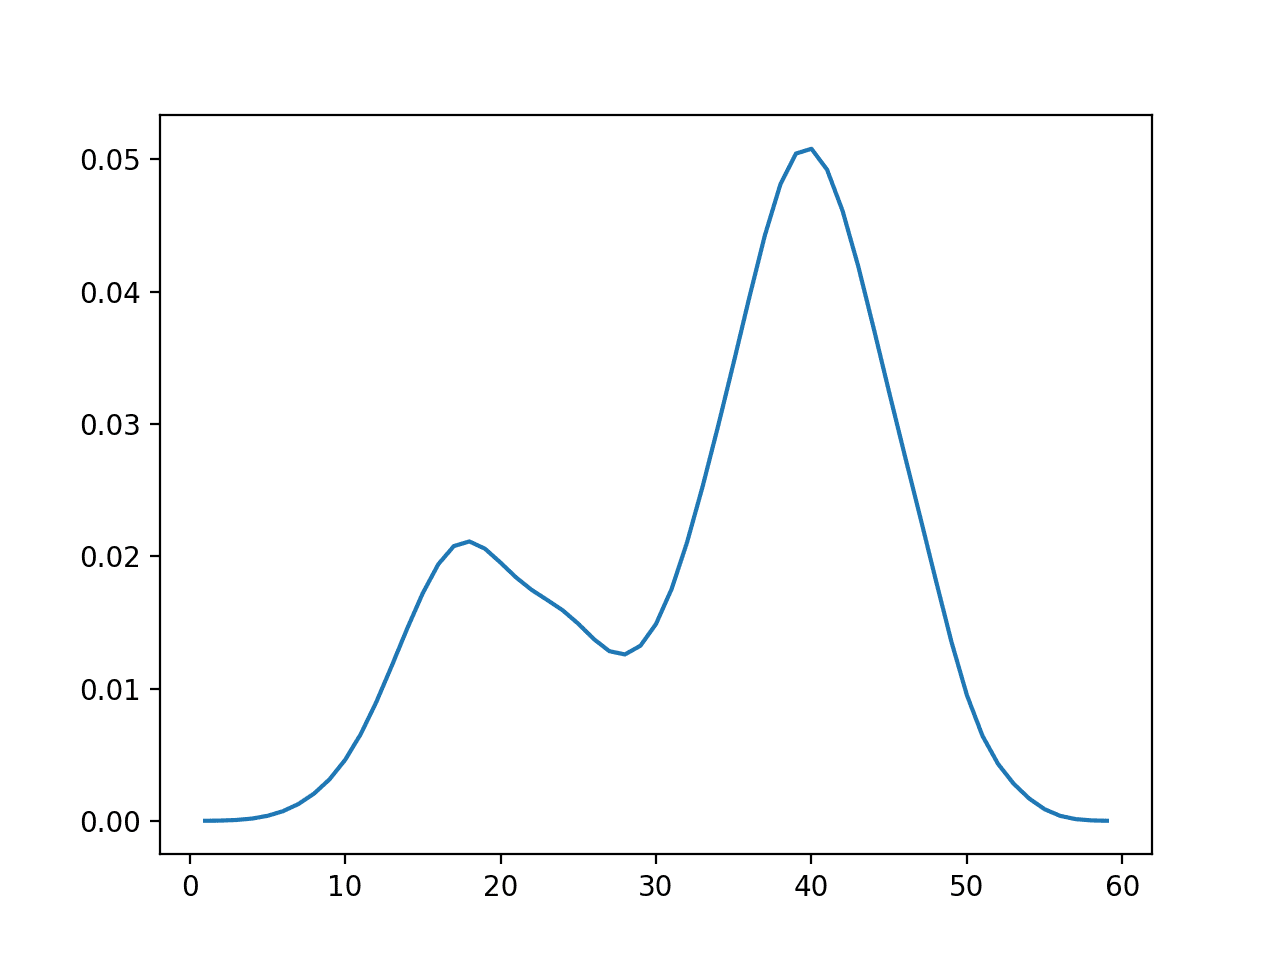 Empirical Probability Density Function for the Bimodal Data Sample